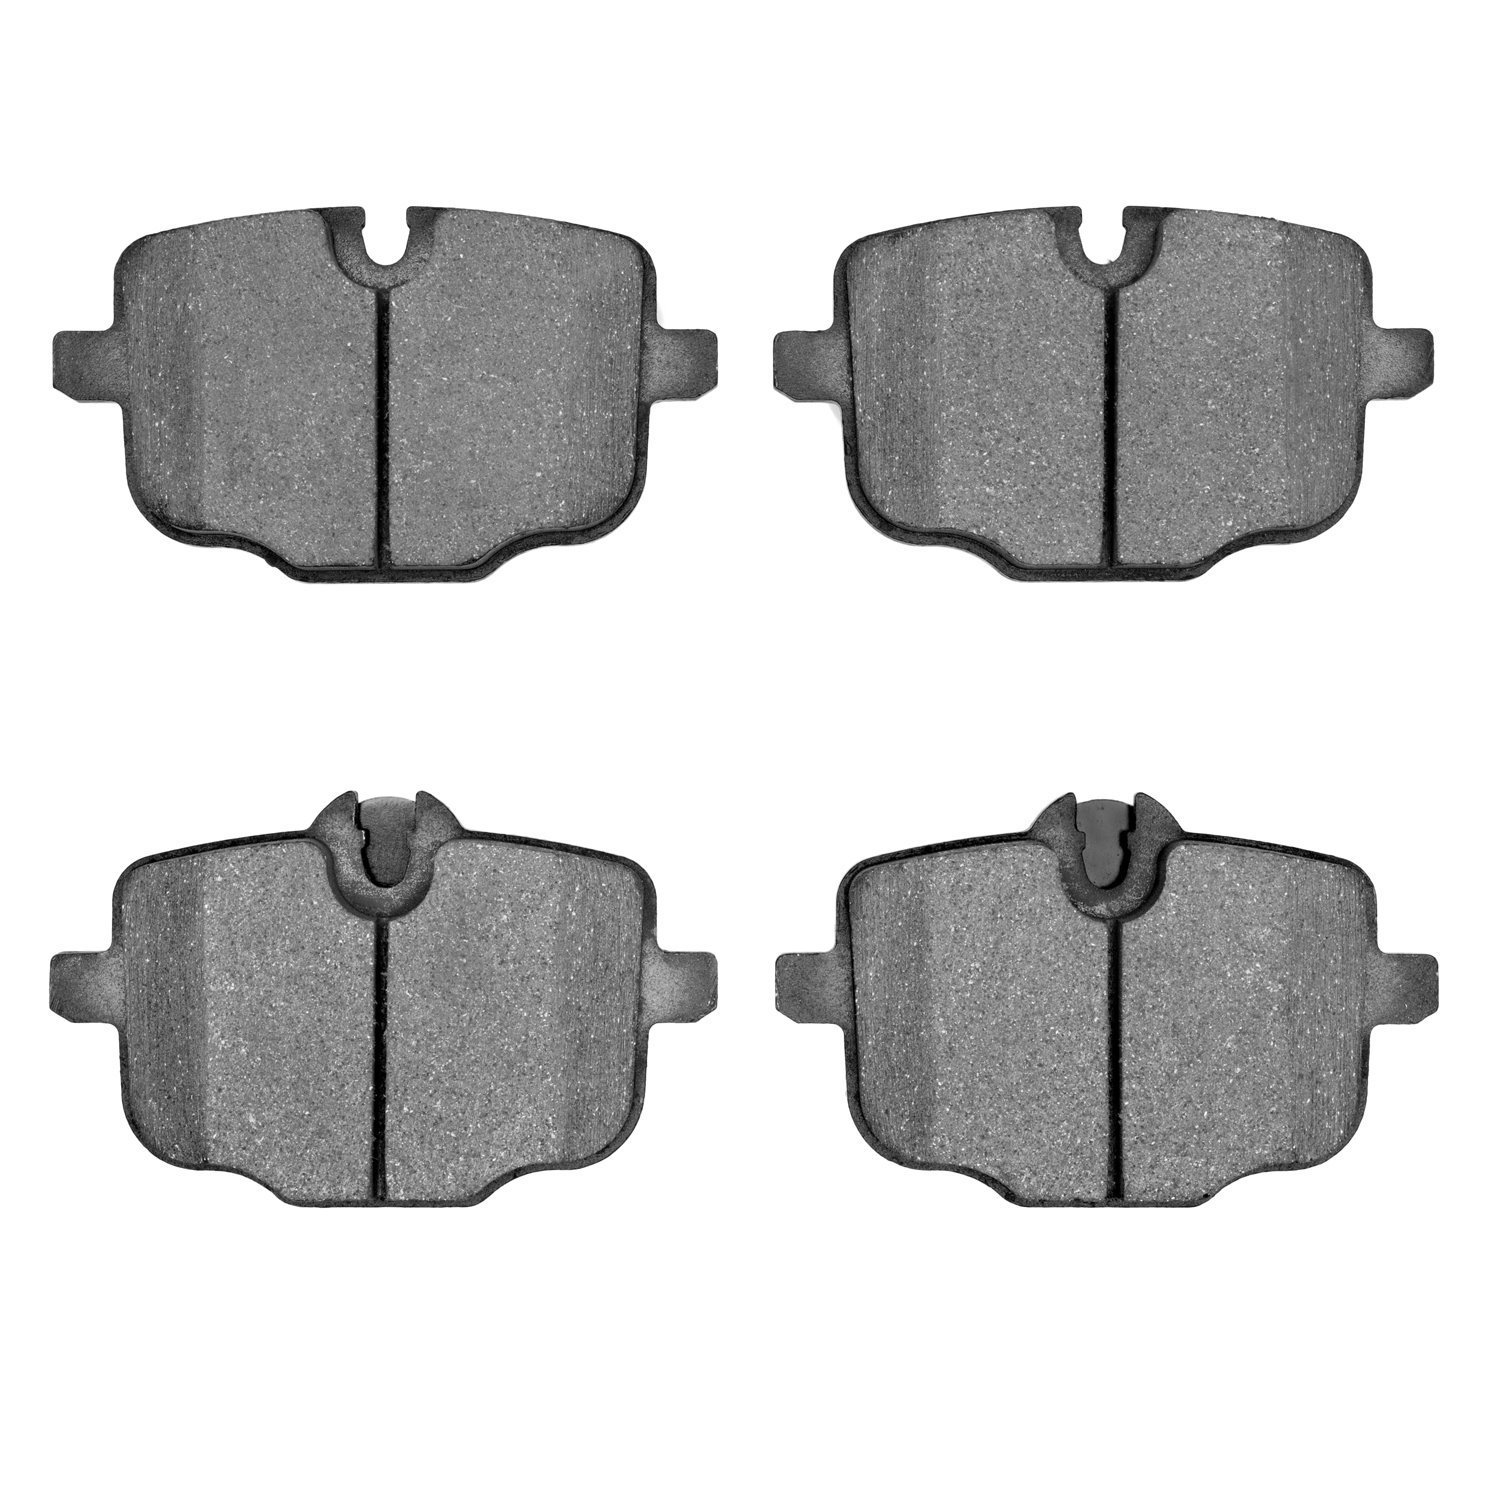 1551-1850-00 5000 Advanced Ceramic Brake Pads, Fits Select BMW, Position: Rear